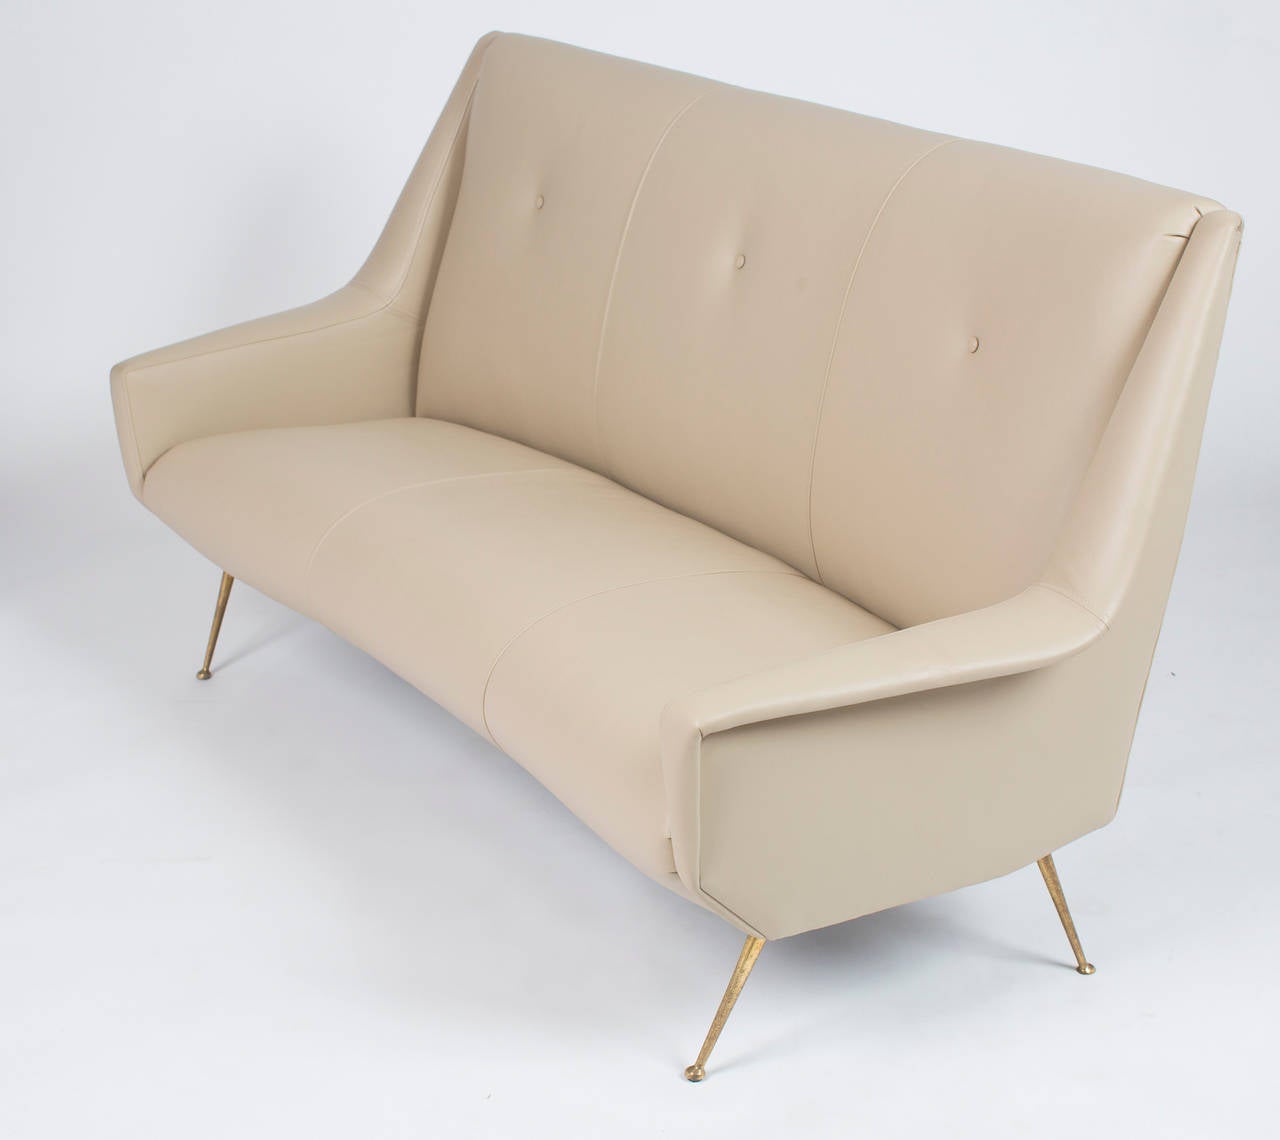 Late 20th Century Italian Mid-Century Modern Leather Sofa in the Manner of Carlo di Carli.